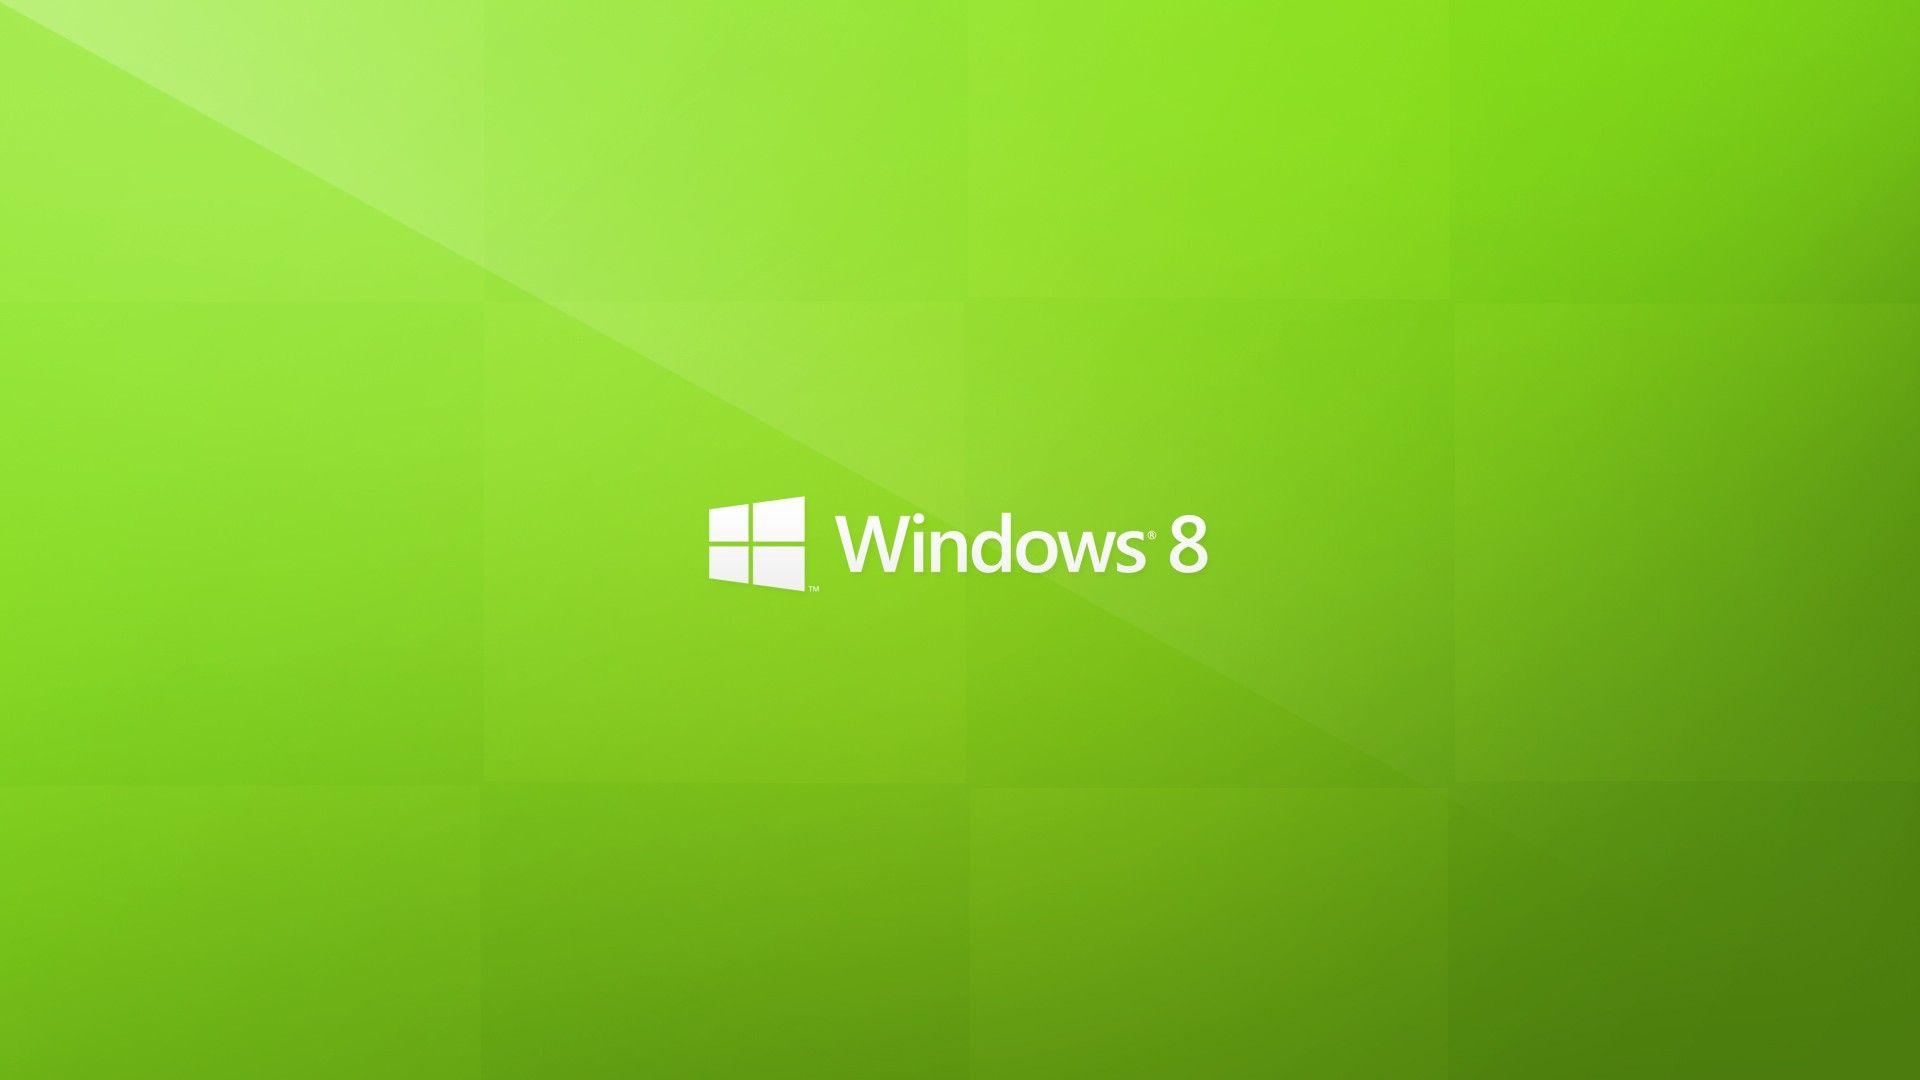 Lime Green Windows Logo - Lime Green Windows 8